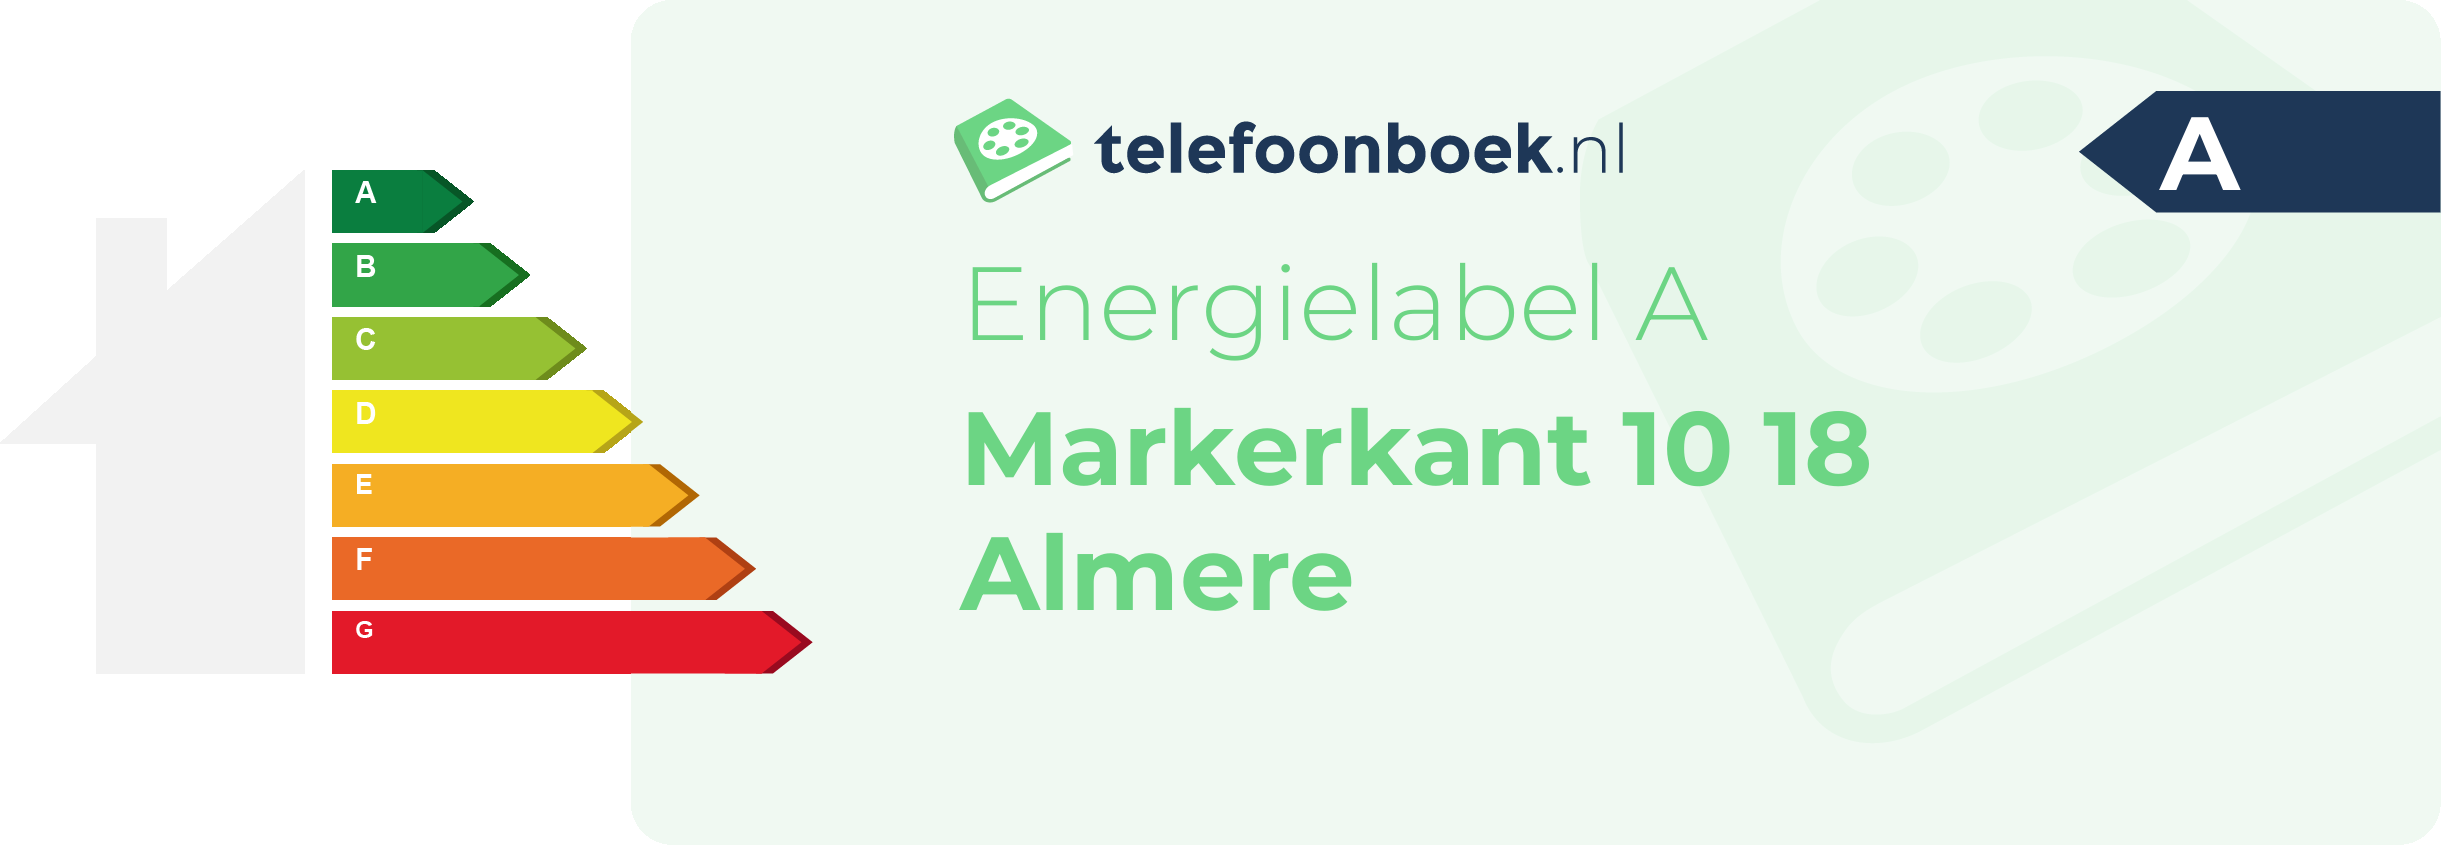 Energielabel Markerkant 10 18 Almere